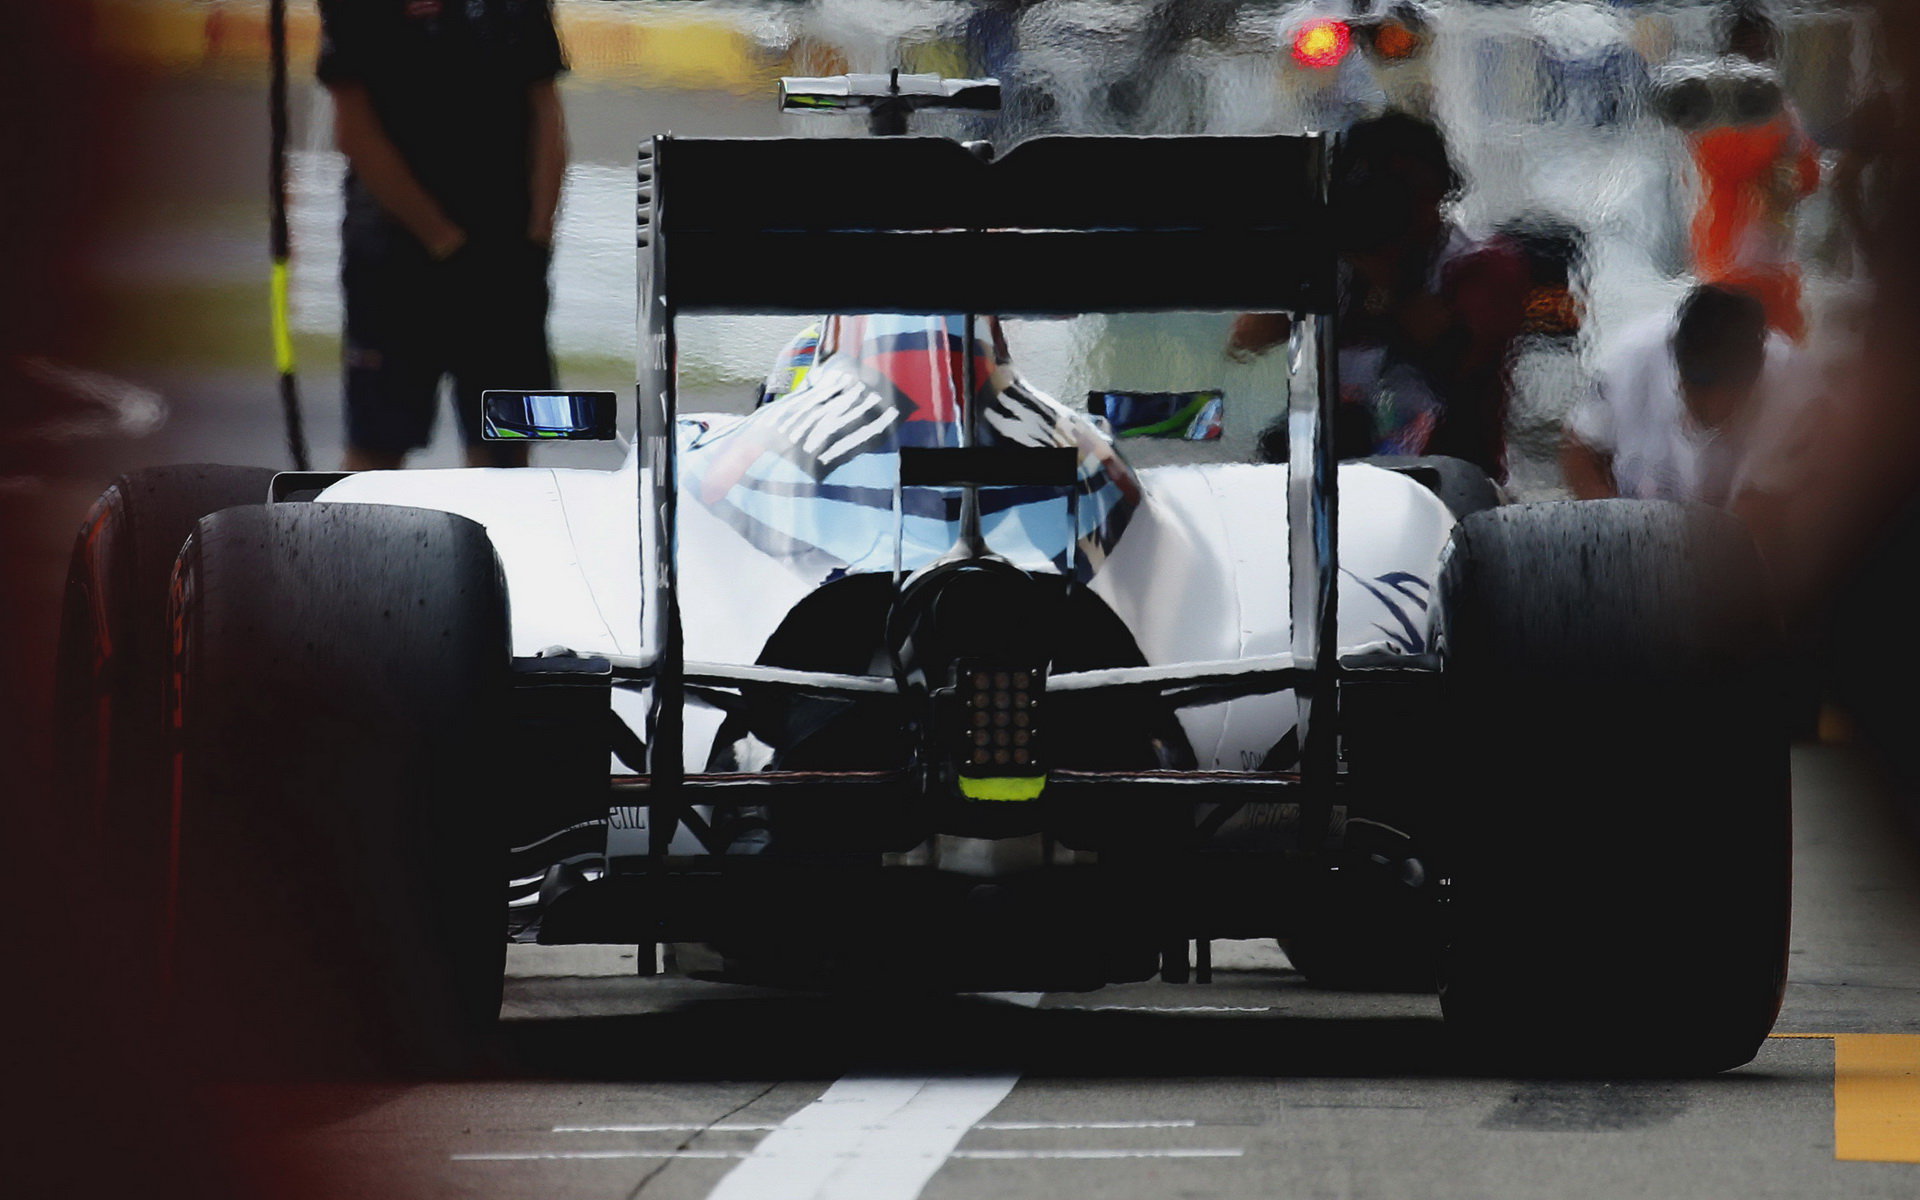 Felipe Massa, GP Japonska (Suzuka)